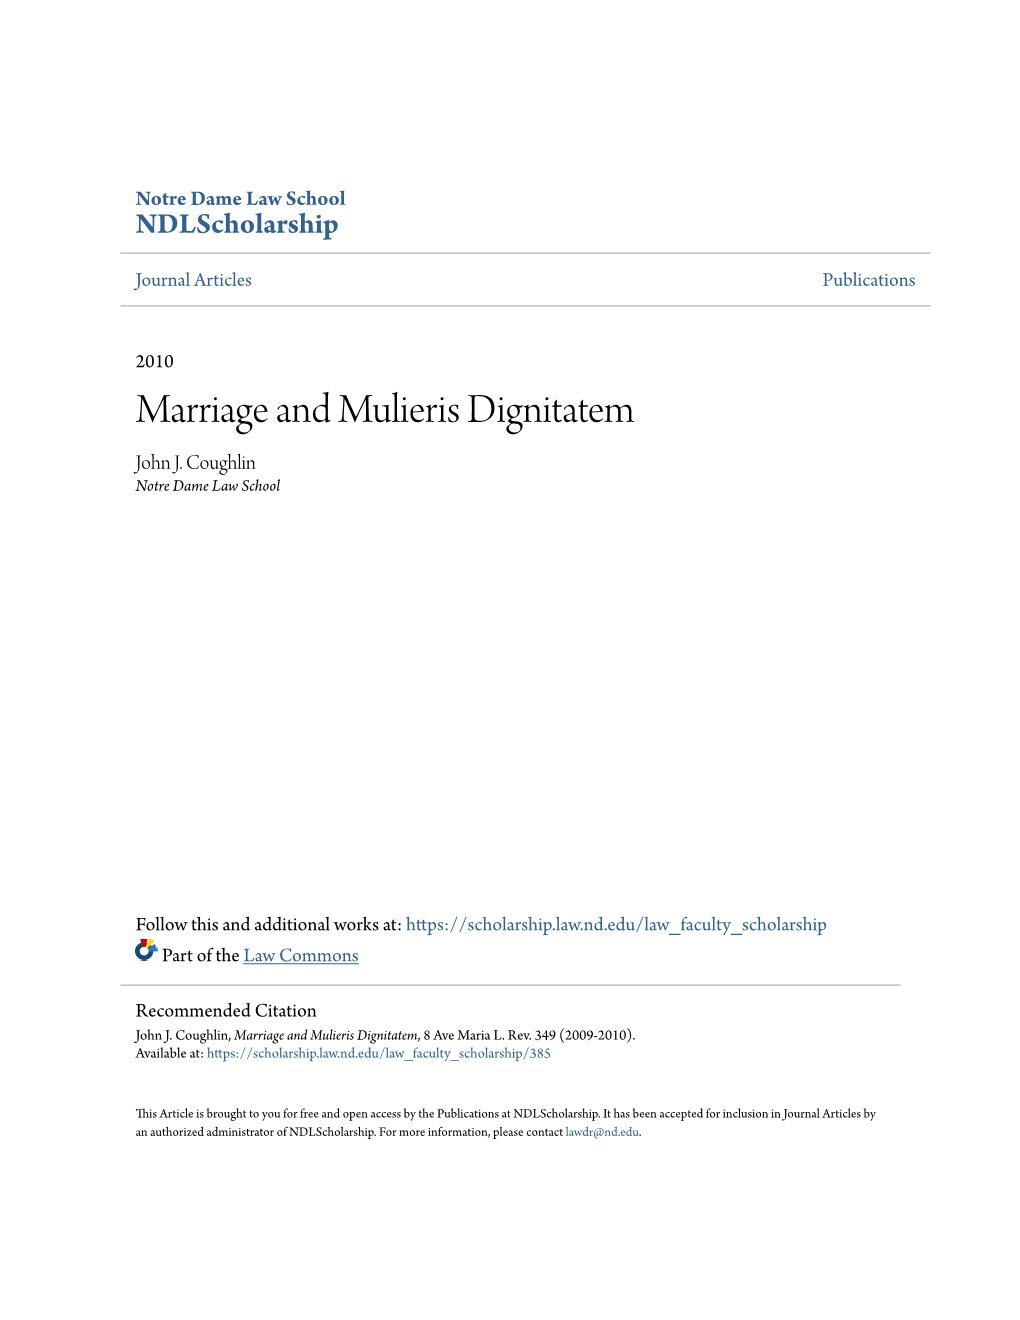 Marriage and Mulieris Dignitatem John J